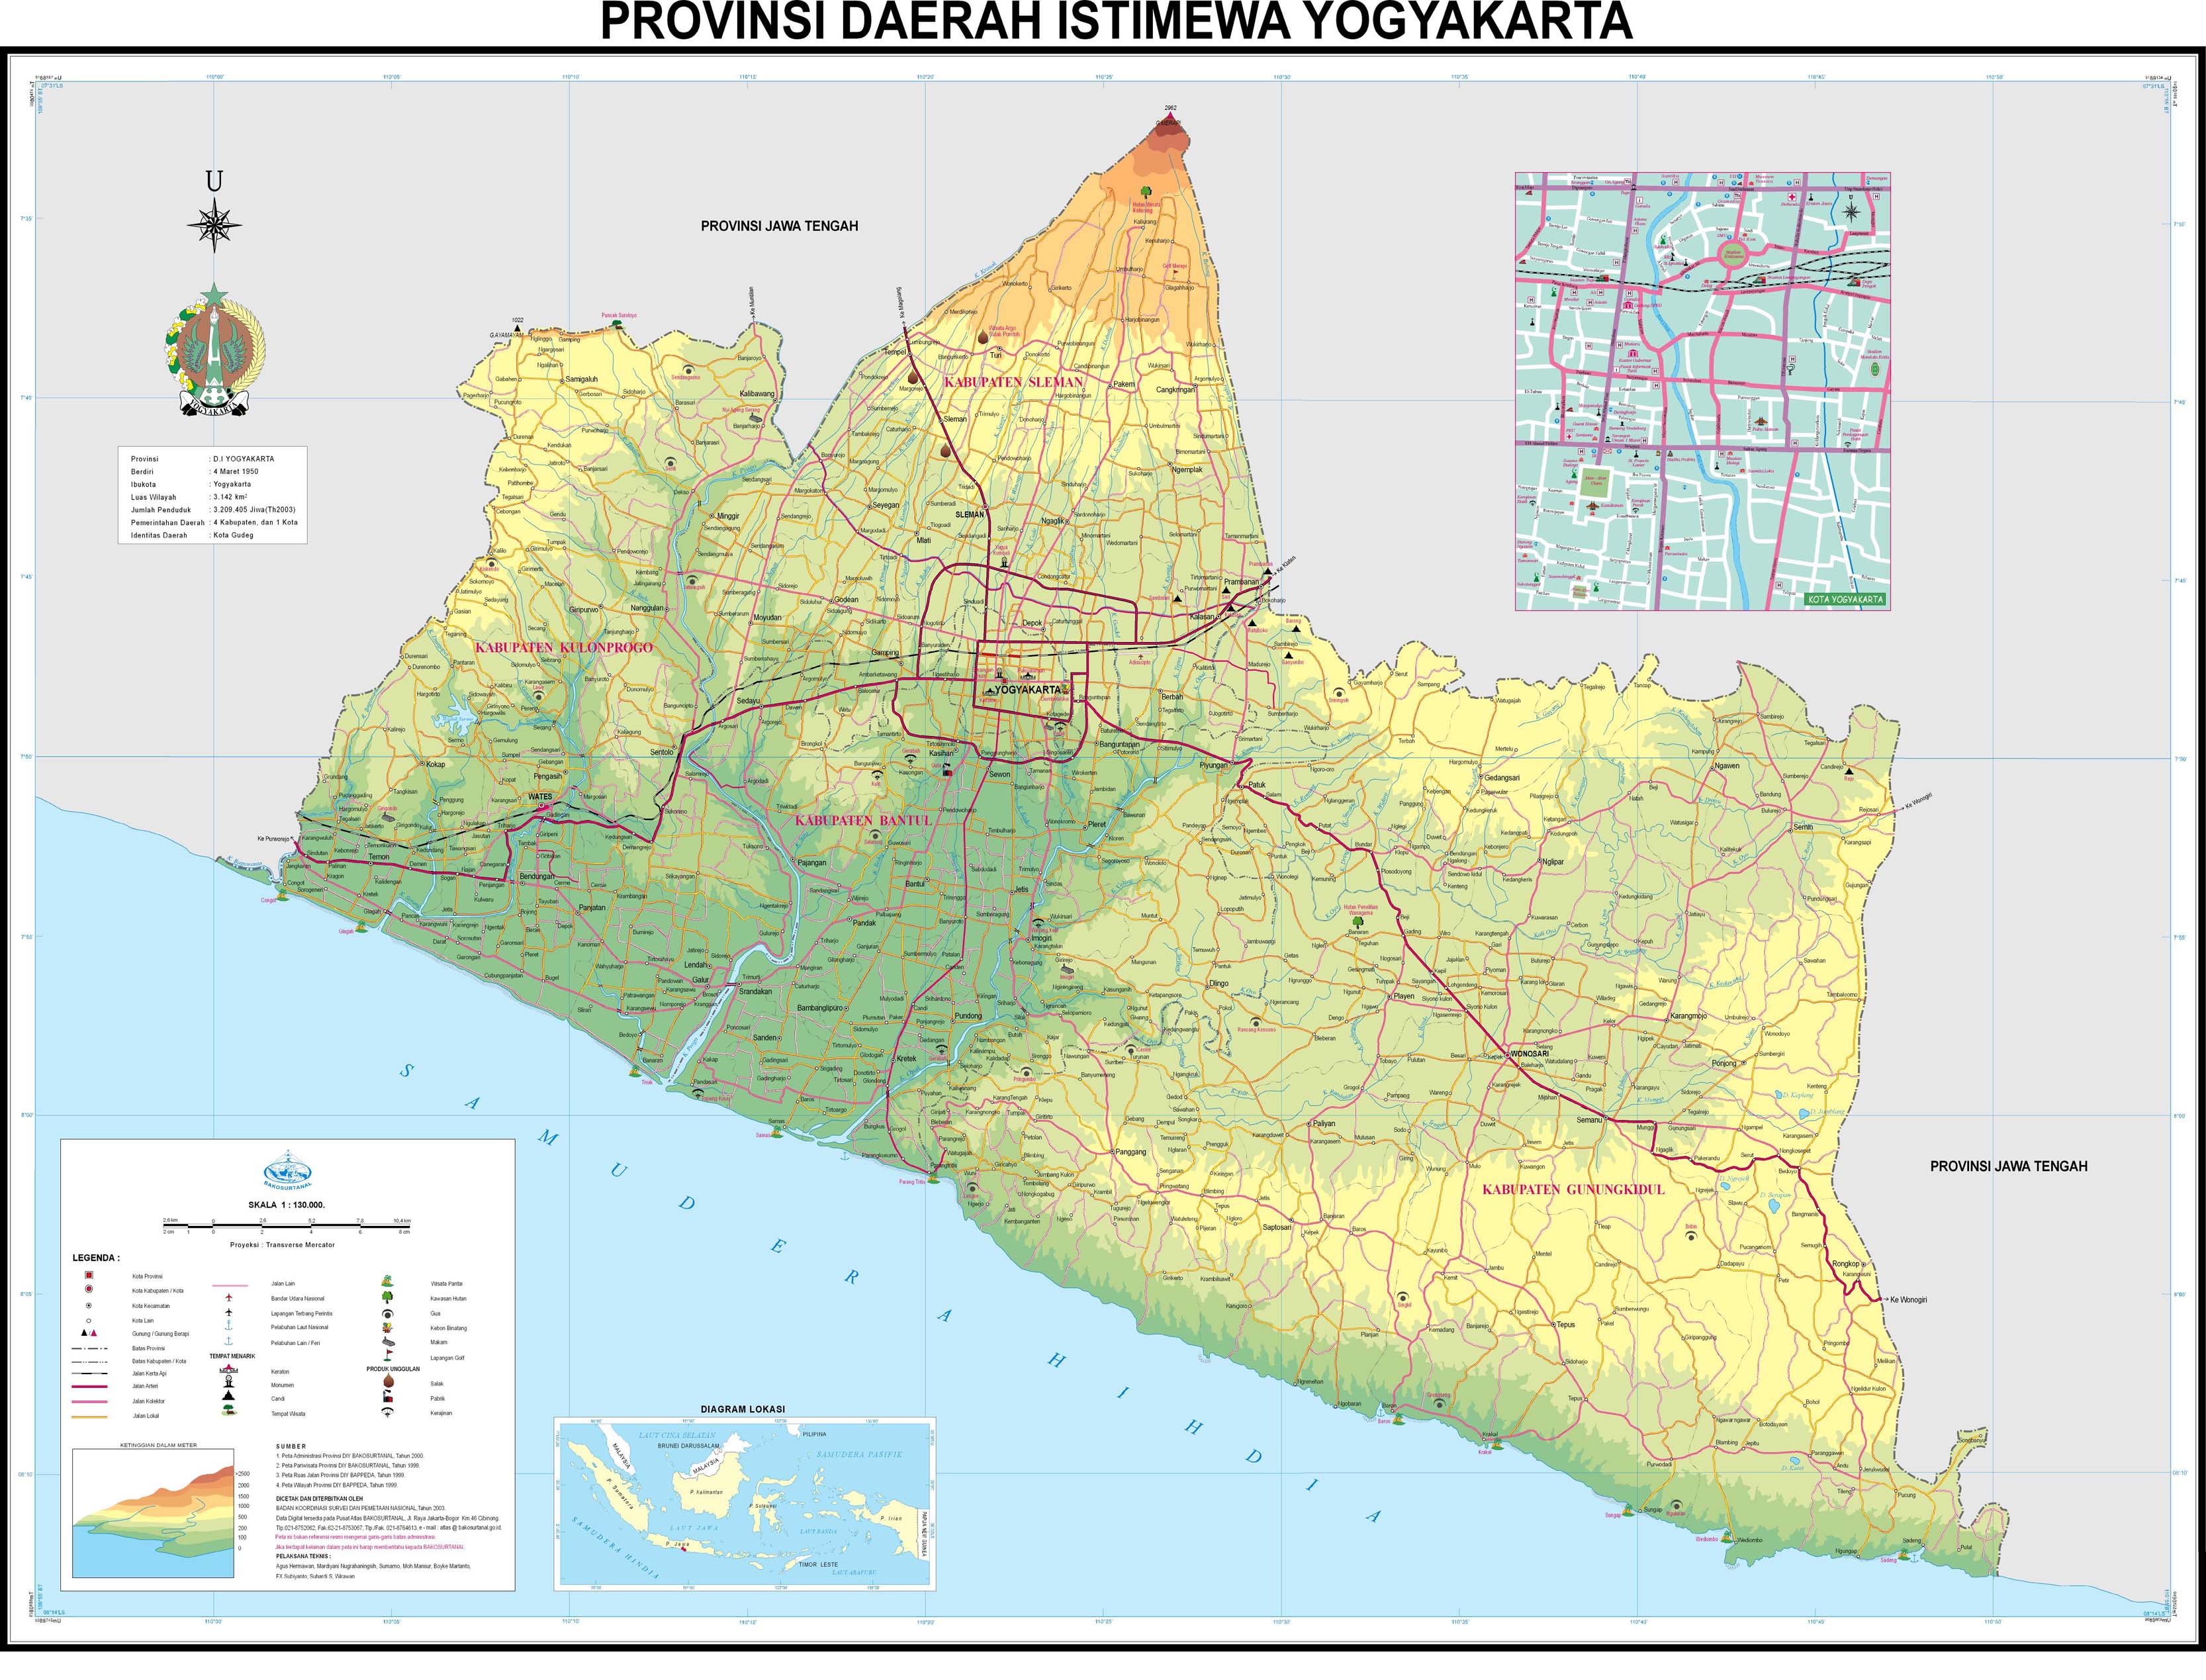 Printer Yogyakarta - Druckerzubehr 77 Blog